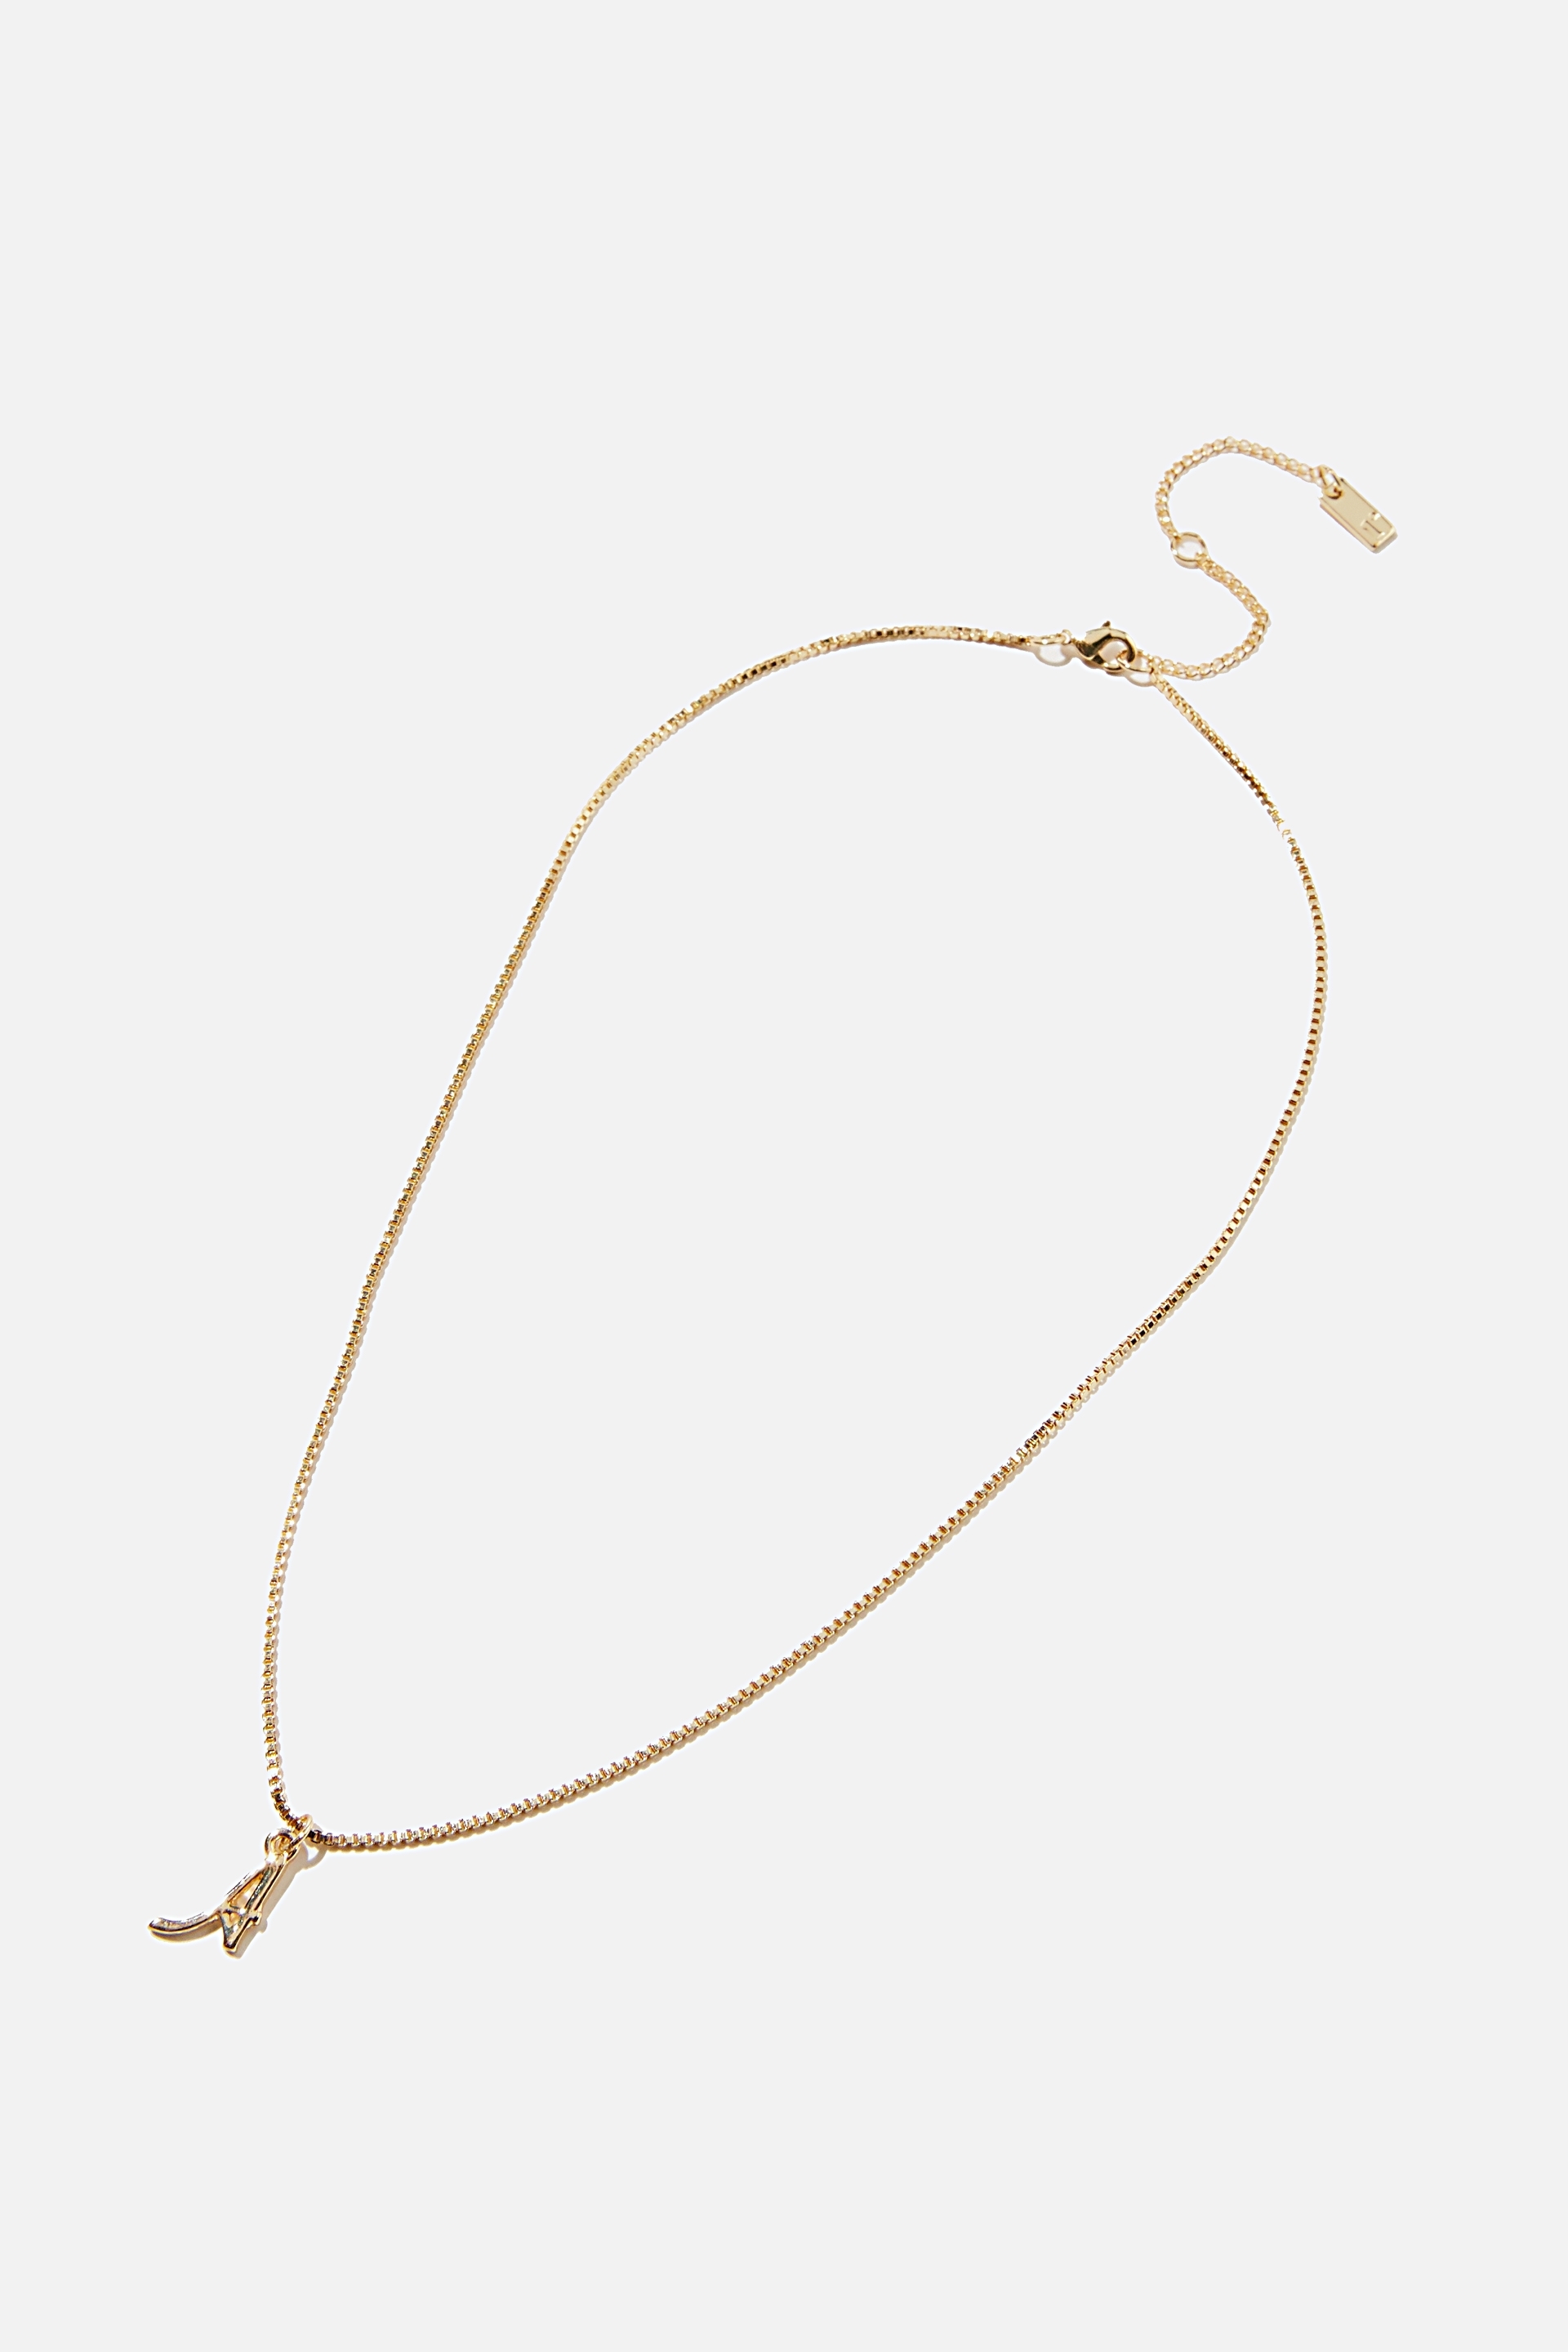 Rubi - Premium Pendant Necklace - Gold plated a